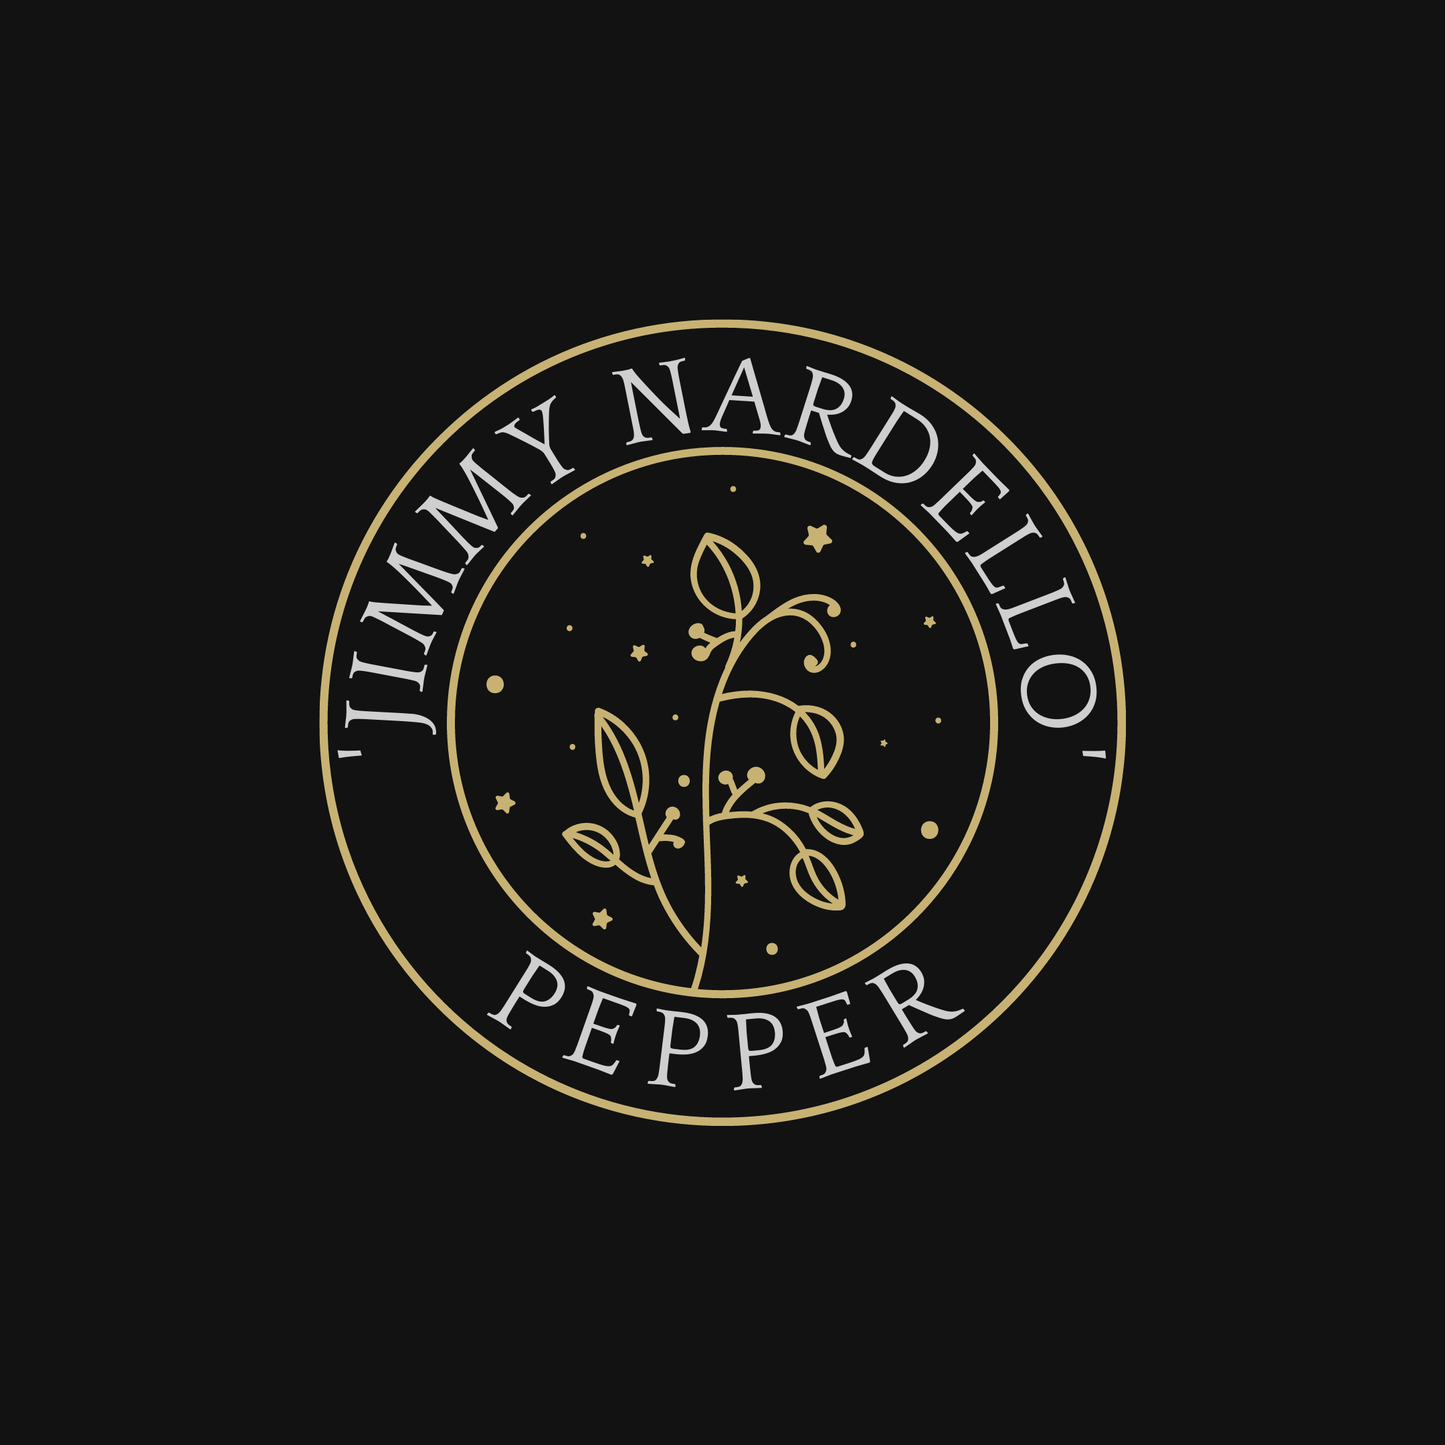 Jimmy Nardello Pepper Seeds (Sweet, Italian Frying)